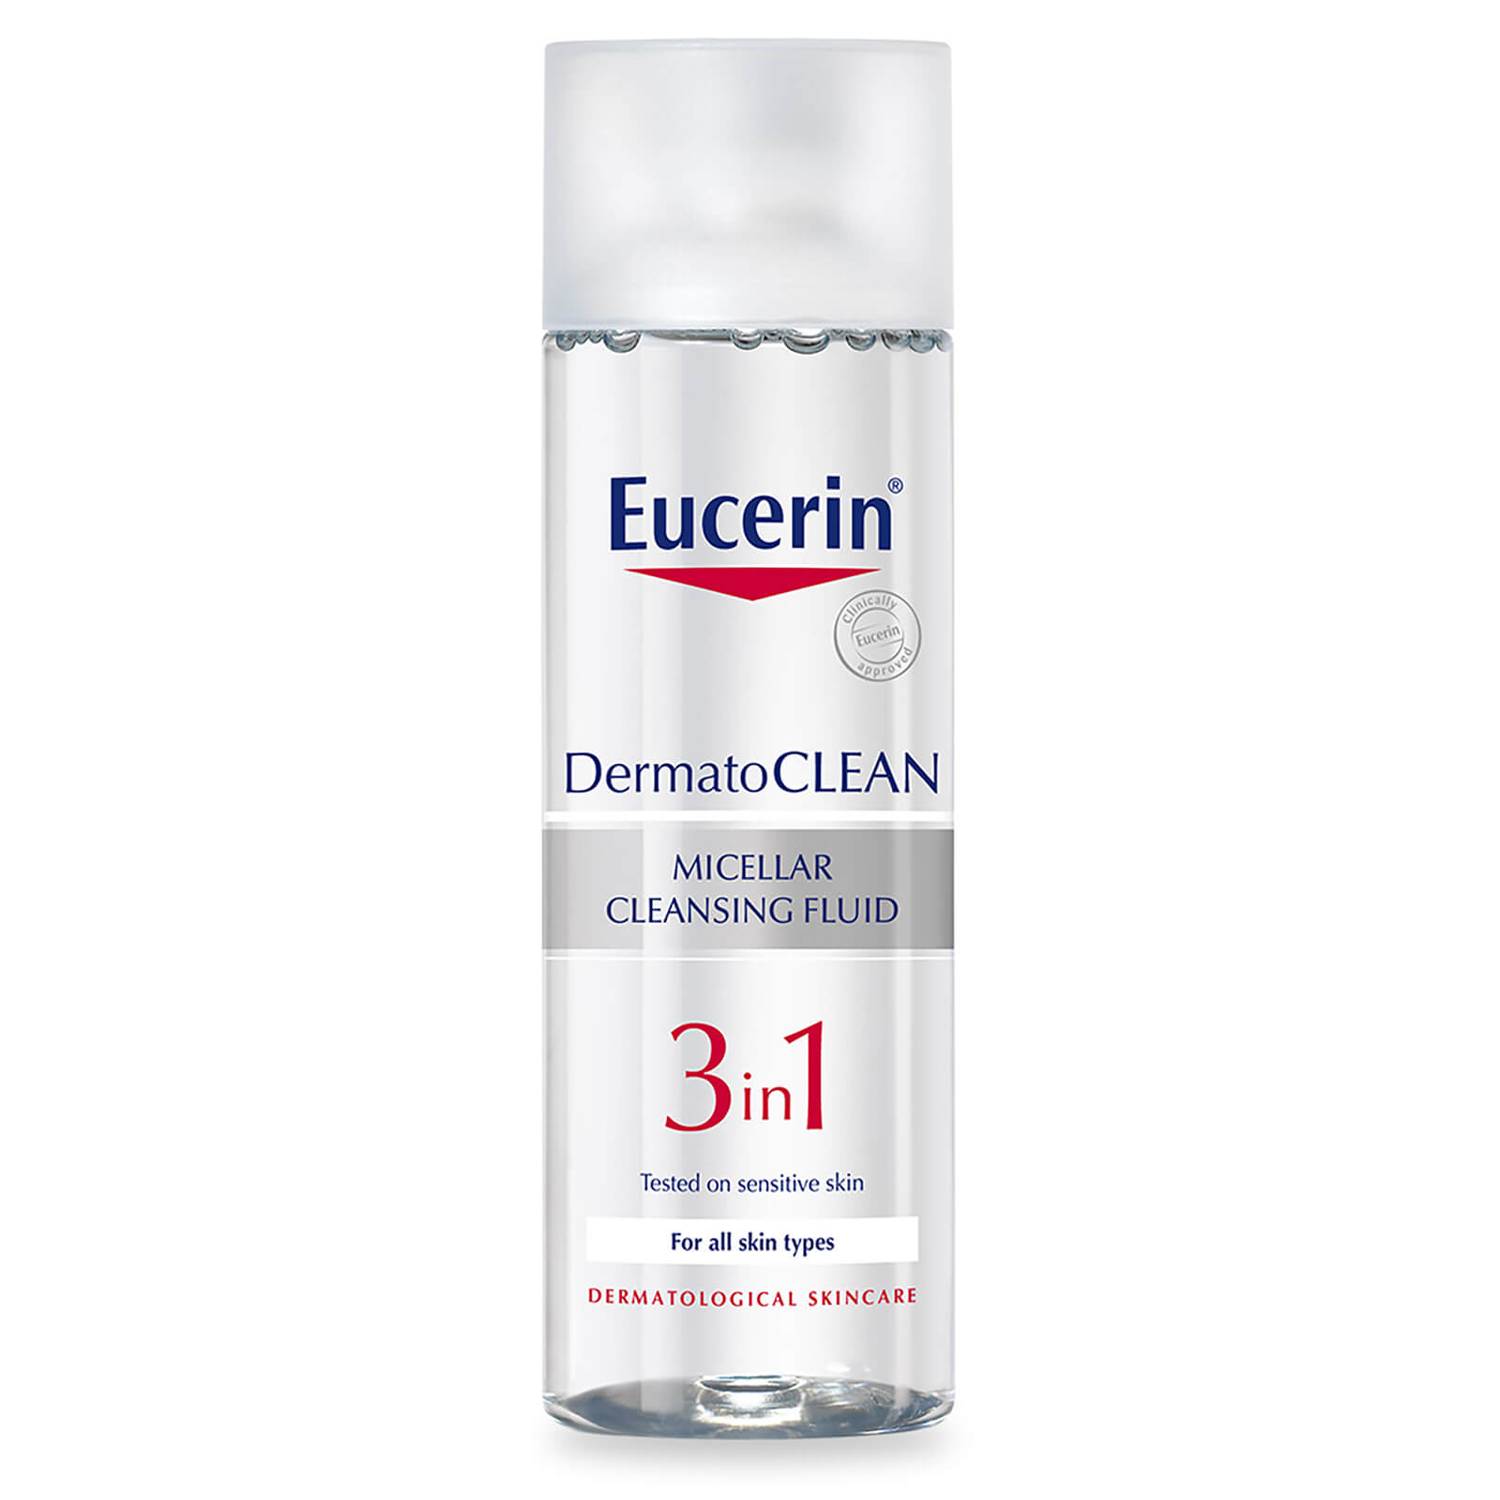 Eucerin - DermatoClean 3in1 Micellar Cleansing Fluid